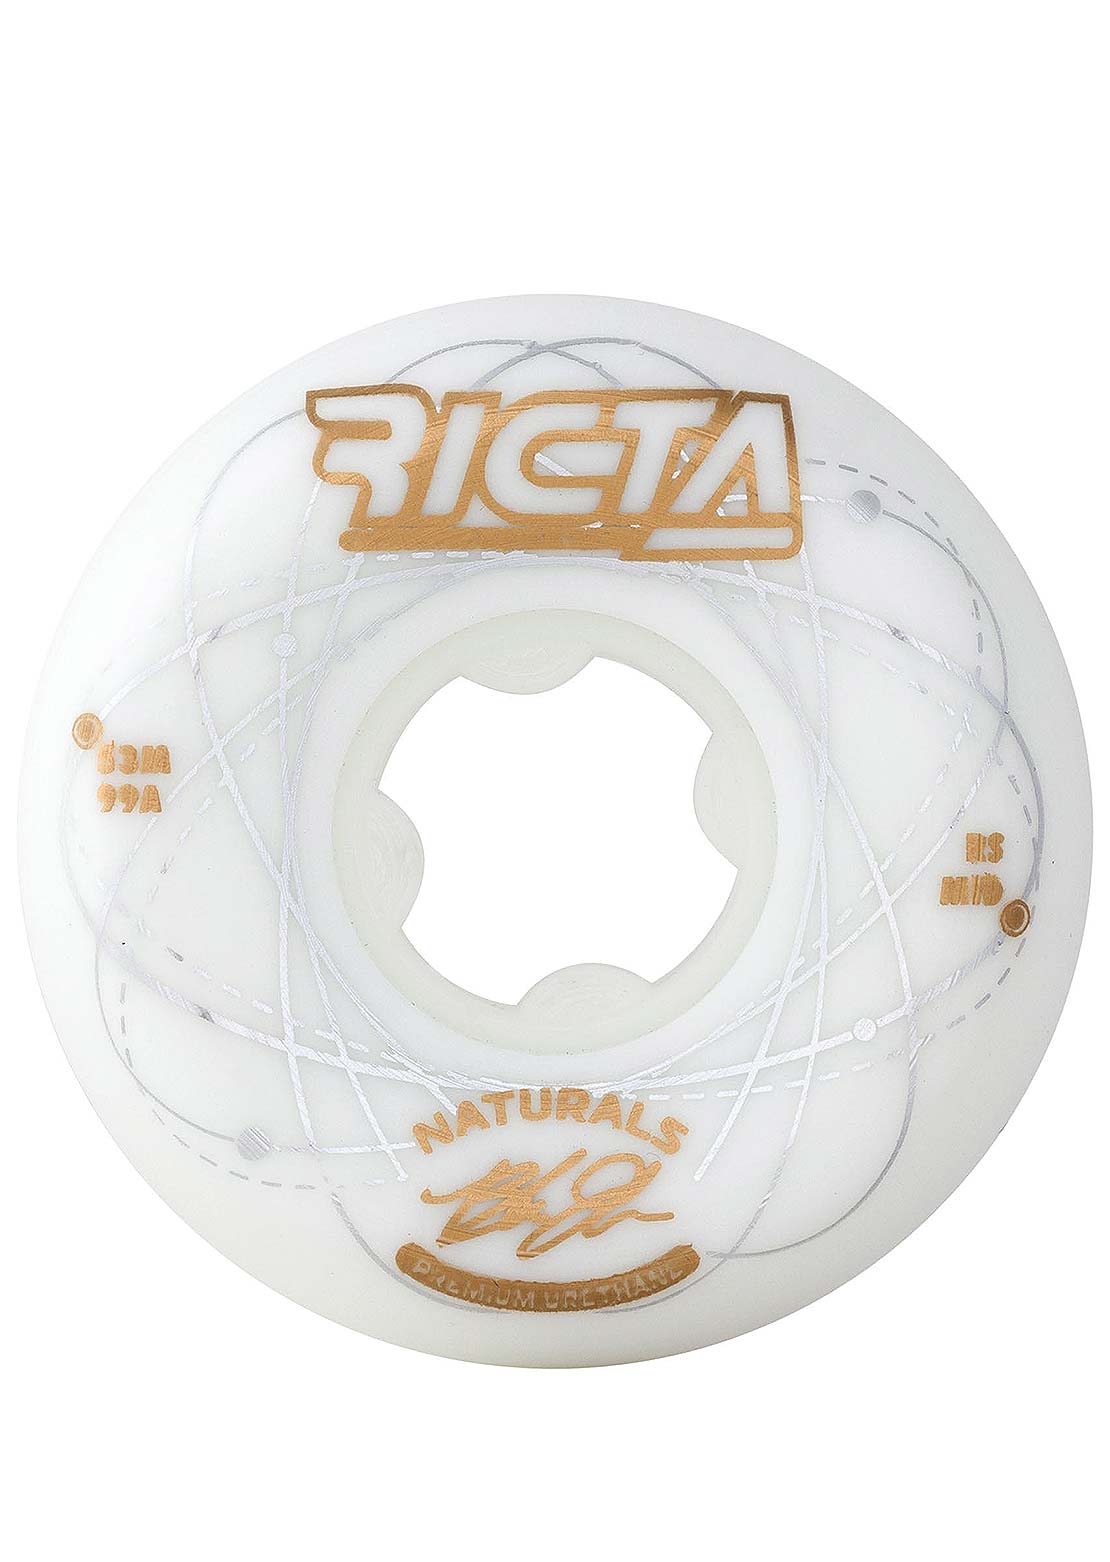 Ricta Johnson Orbital Naturals Mid 99A Skateboard Wheels White/Gold 53 mm